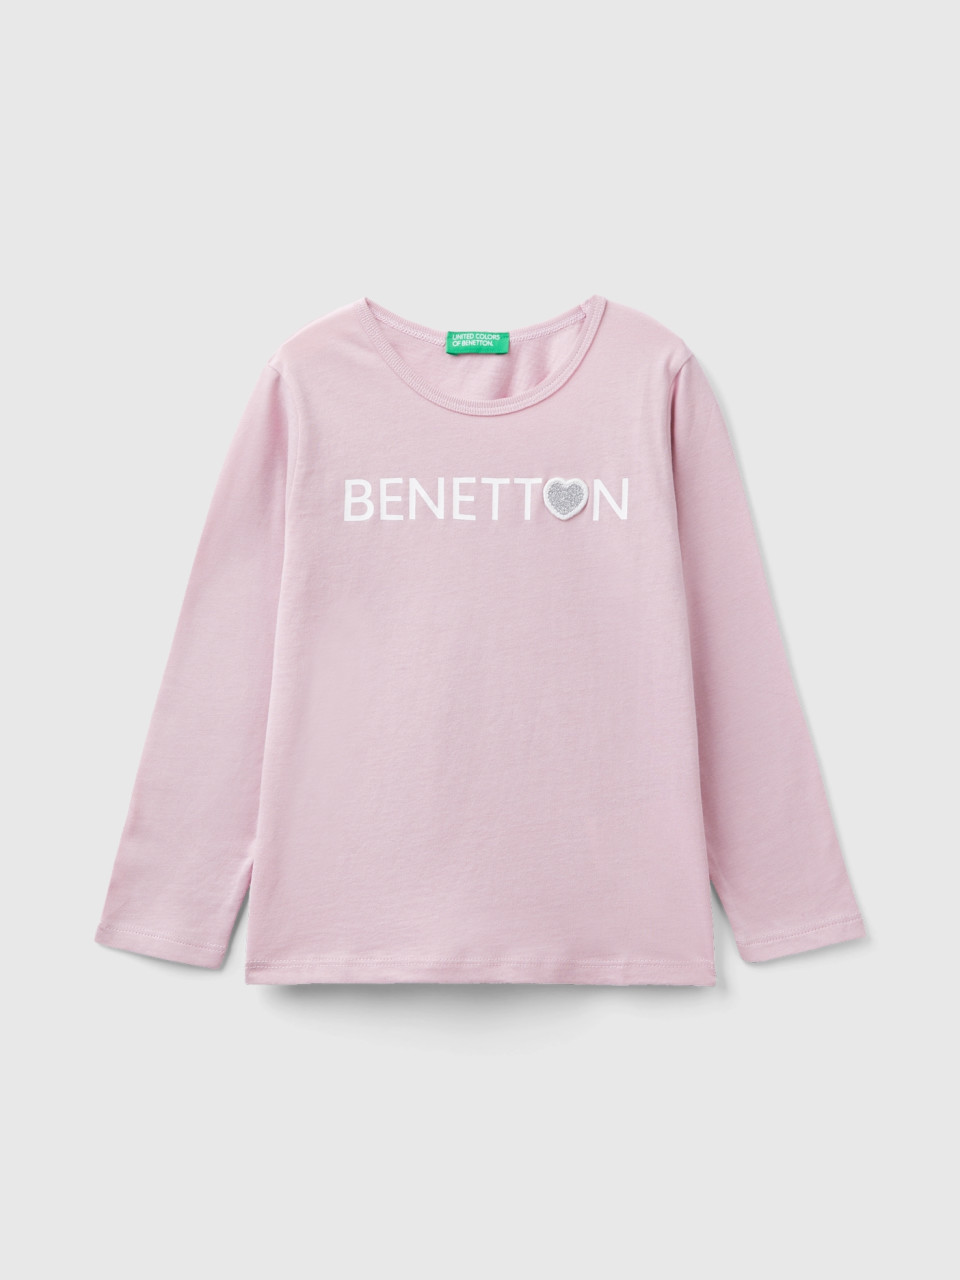 Benetton, Organic Cotton T-shirt With Glittery Print, Pink, Kids